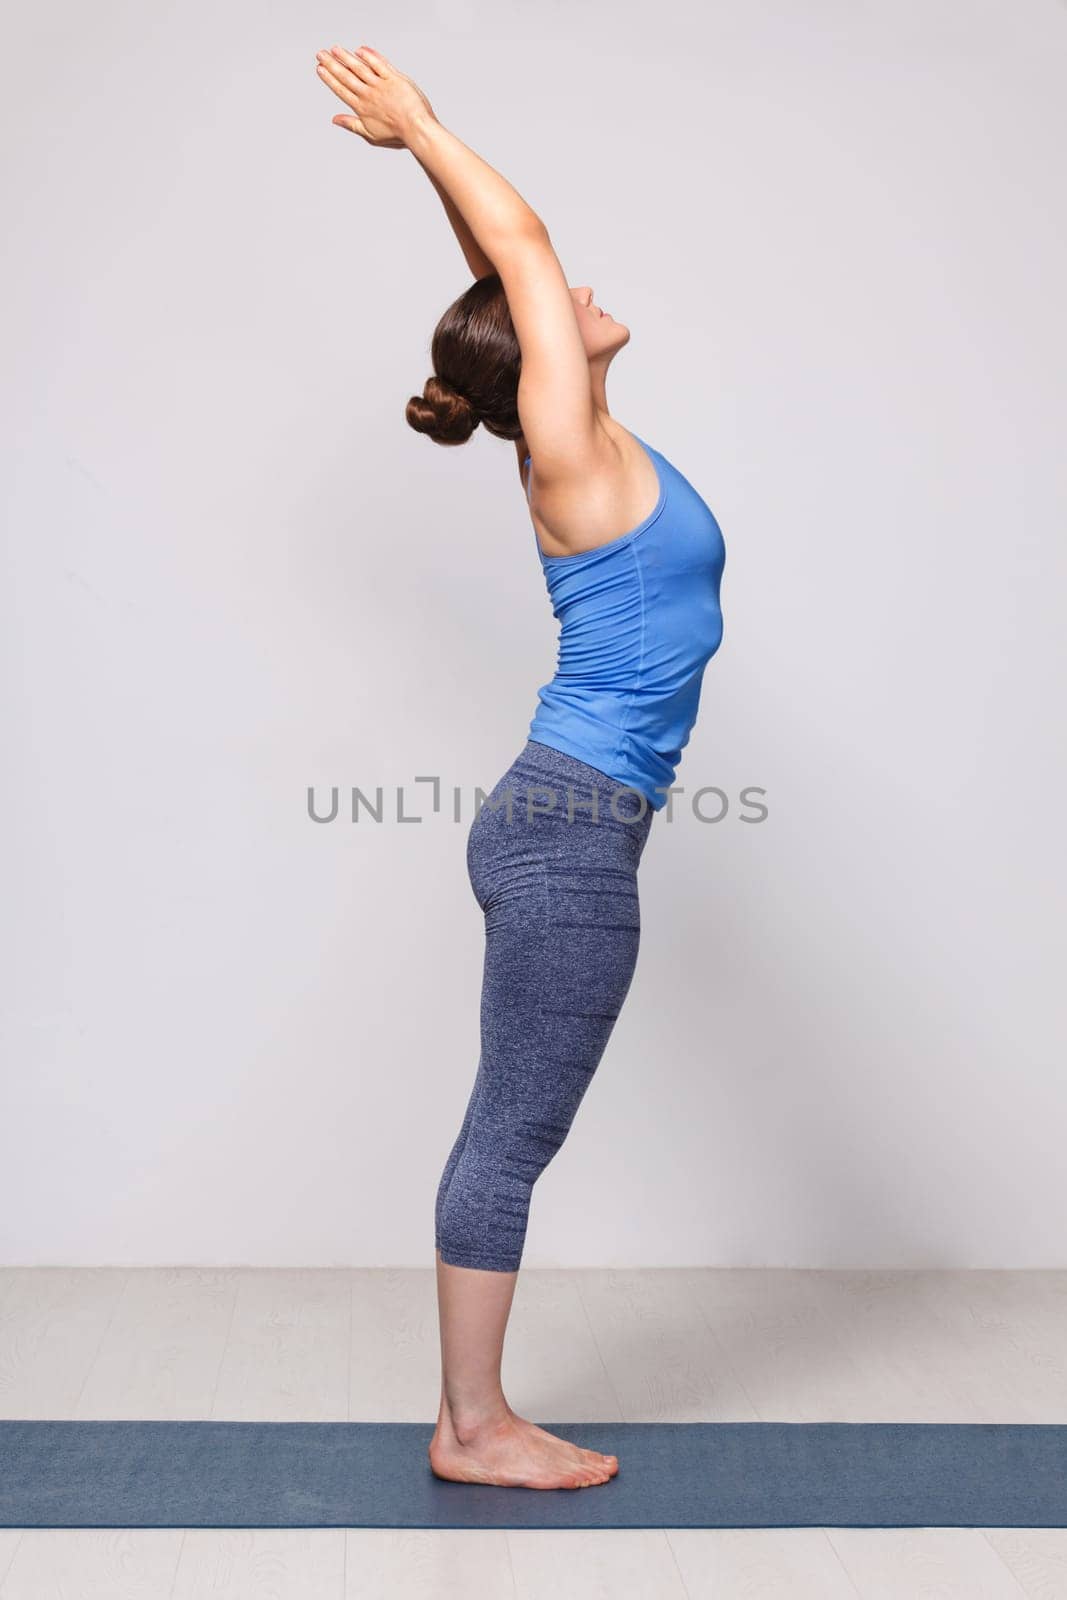 Woman doing Hatha Yoga asana Tadasana - Mountain pose with stretched hands on yoga mat in studio on grey bagckground